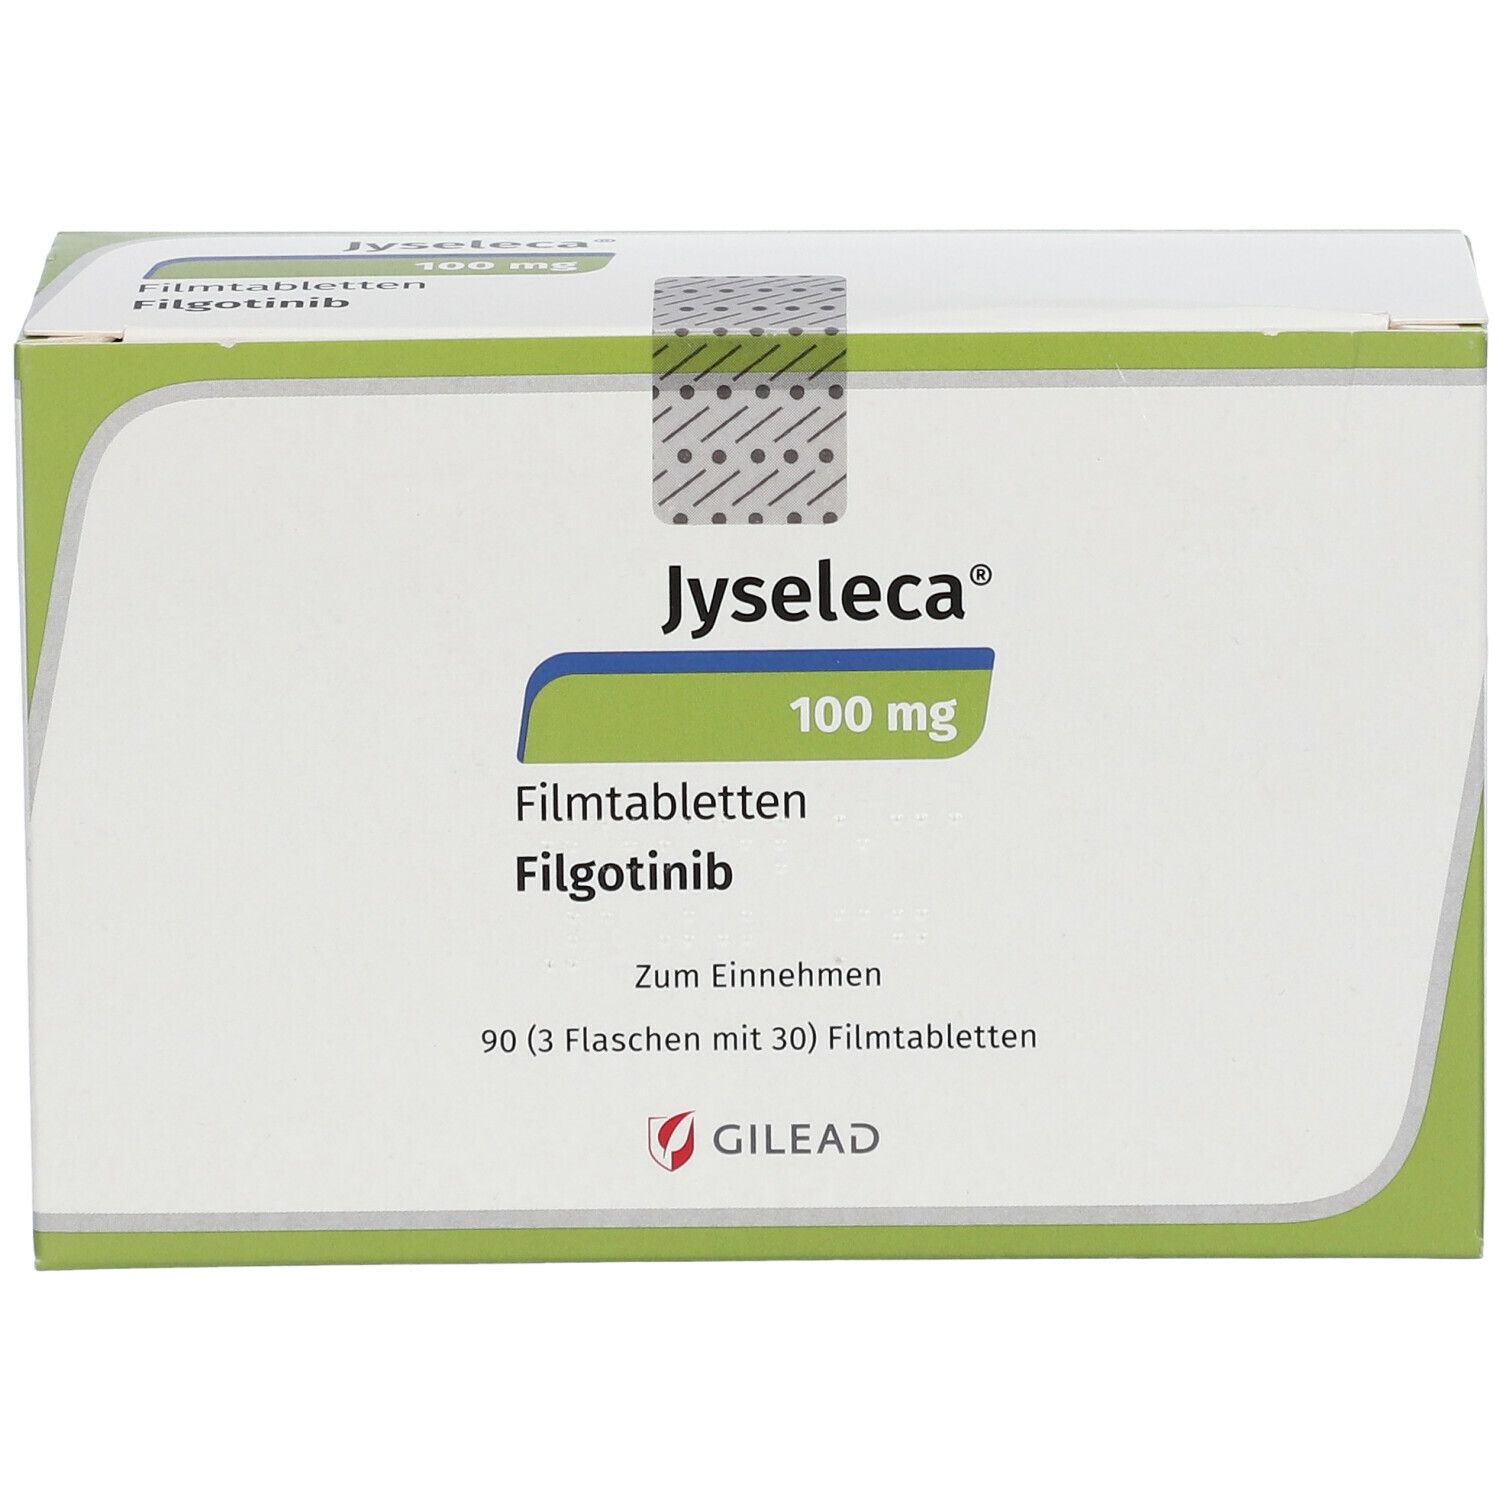 Jyseleca® 100 mg